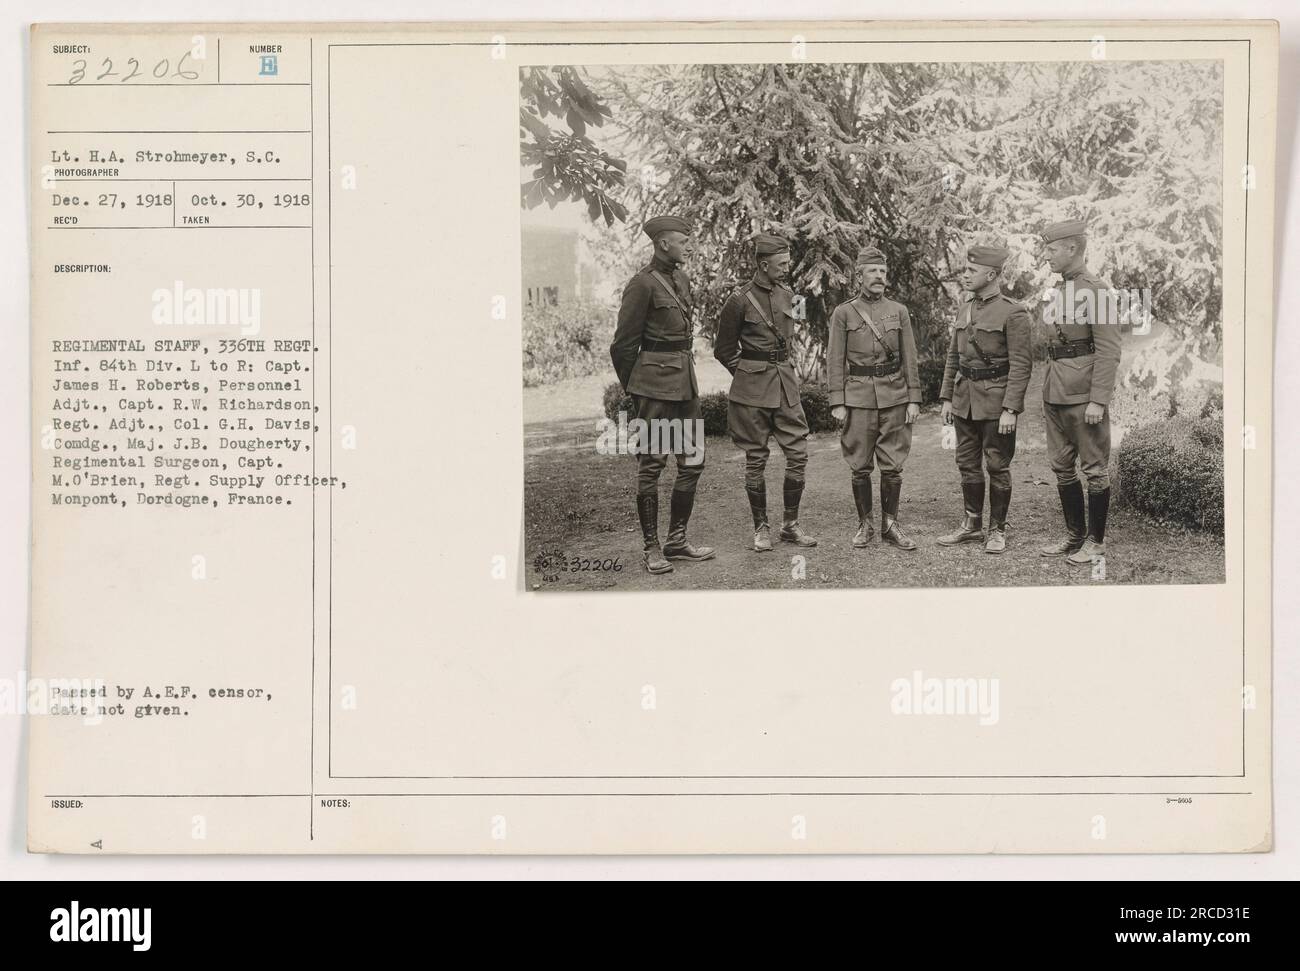 'Regimental staff of the 336th Regiment Infantry, 84th Division, pictured in Monpont, Dordogne, France. From left to right: Capt. James H. Roberts, Personnel Adjutant; Capt. R.W. Richardson, Regiment Adjutant; Col. G.H. Davis, Commanding Officer; Maj. J.B. Dougherty, Regimental Surgeon; Capt. M. O'Brien, Regiment Supply Officer. Photo taken by Lt. H.A. Strohmeyer. Passed by A.E.F. censor.' Stock Photo